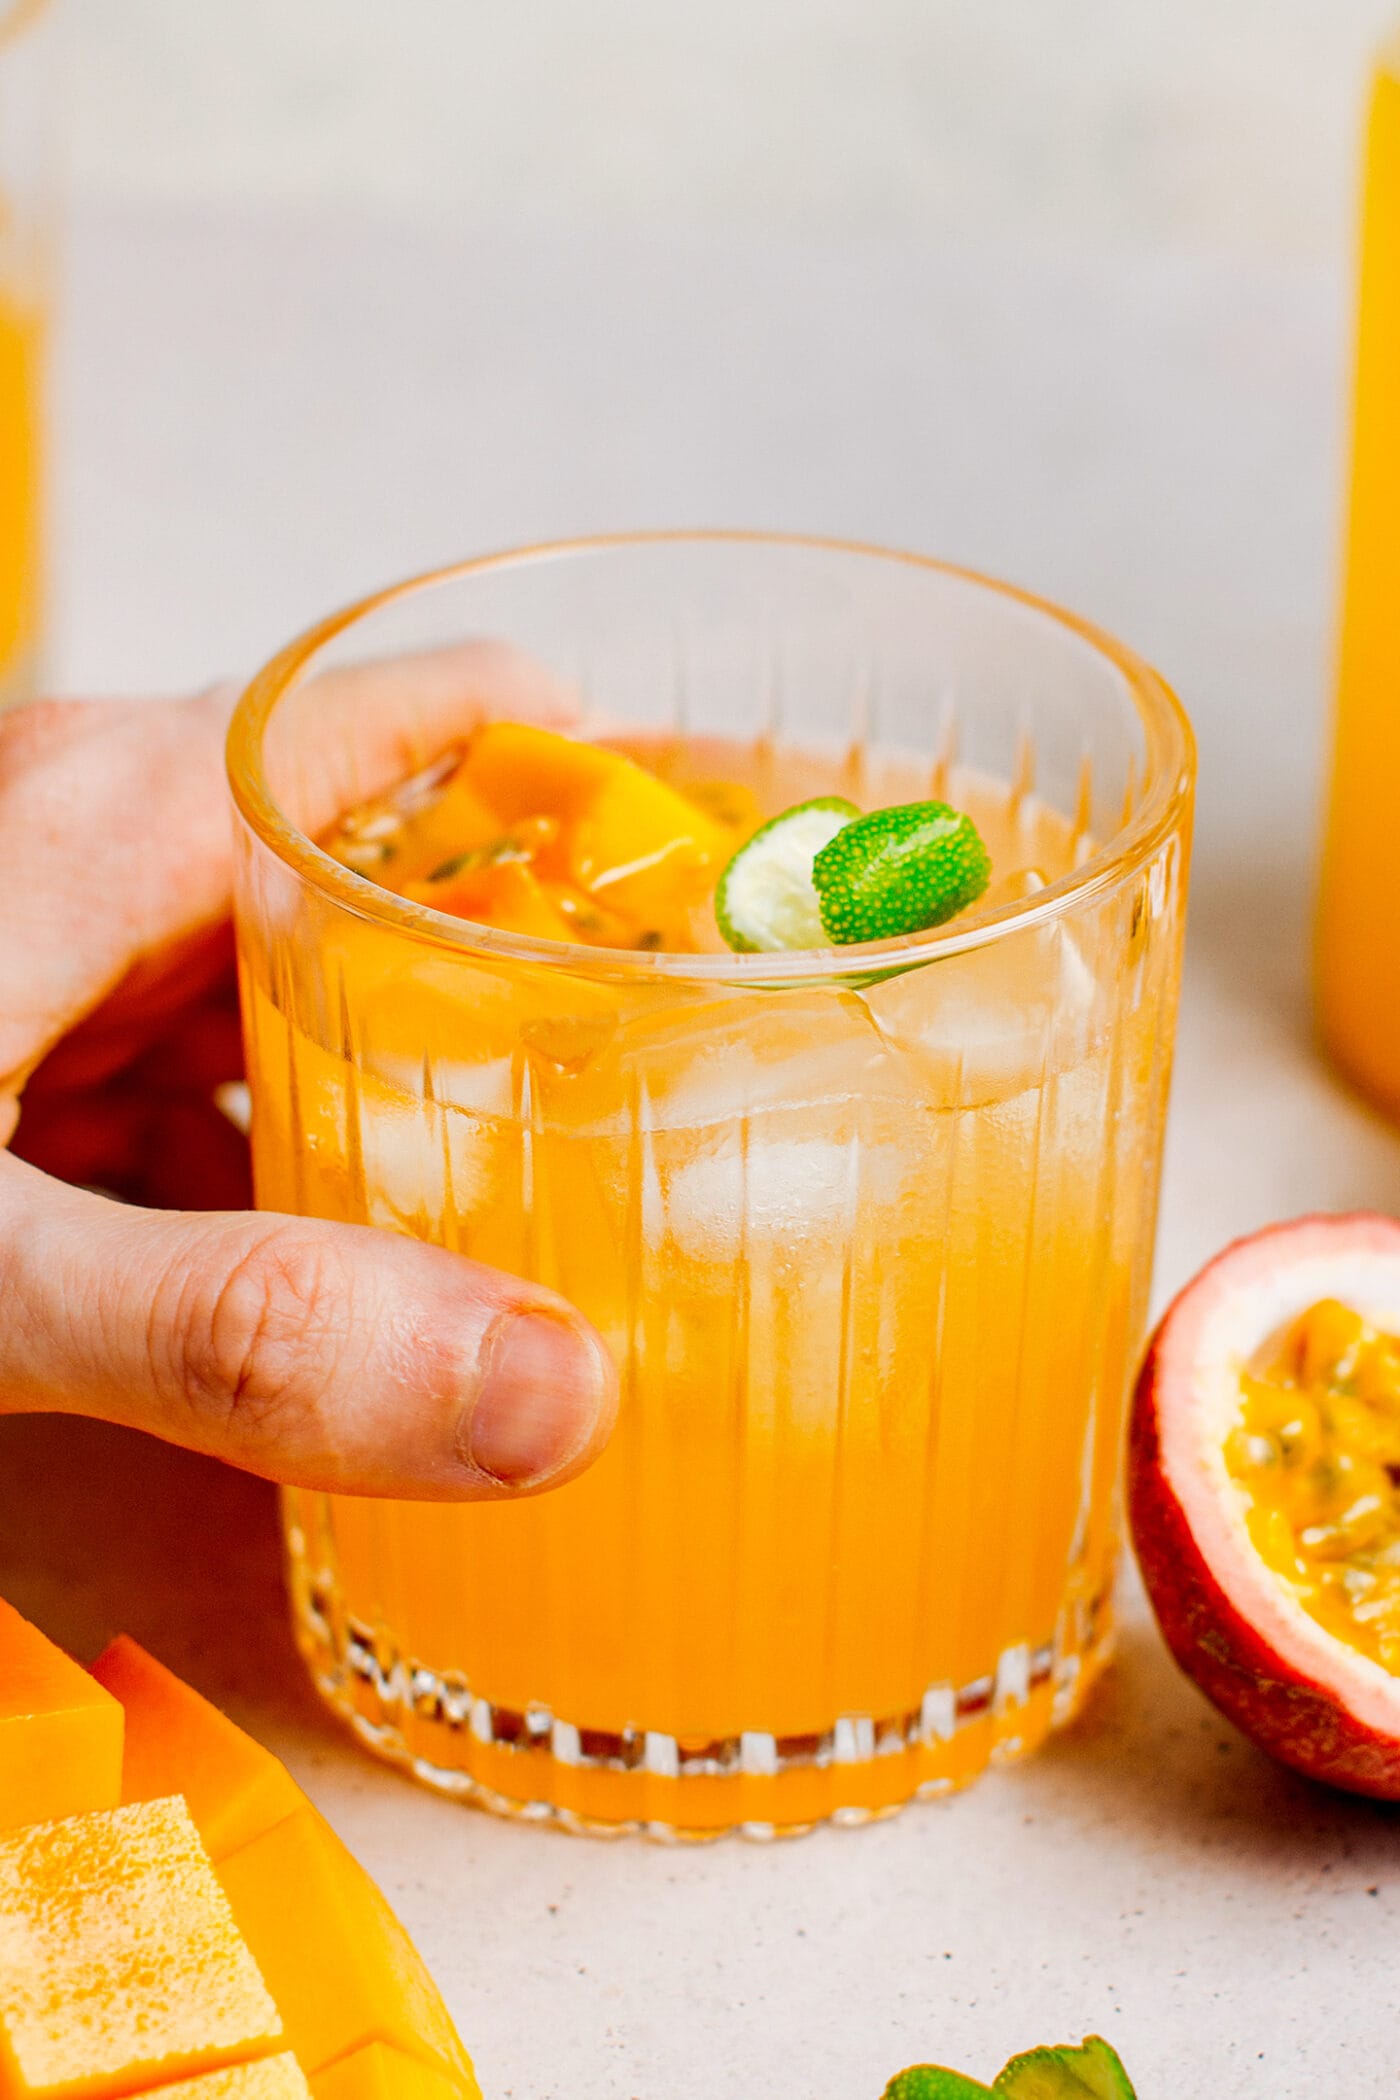 Holding a glass of mango liquor with mango chunks and passion fruit.